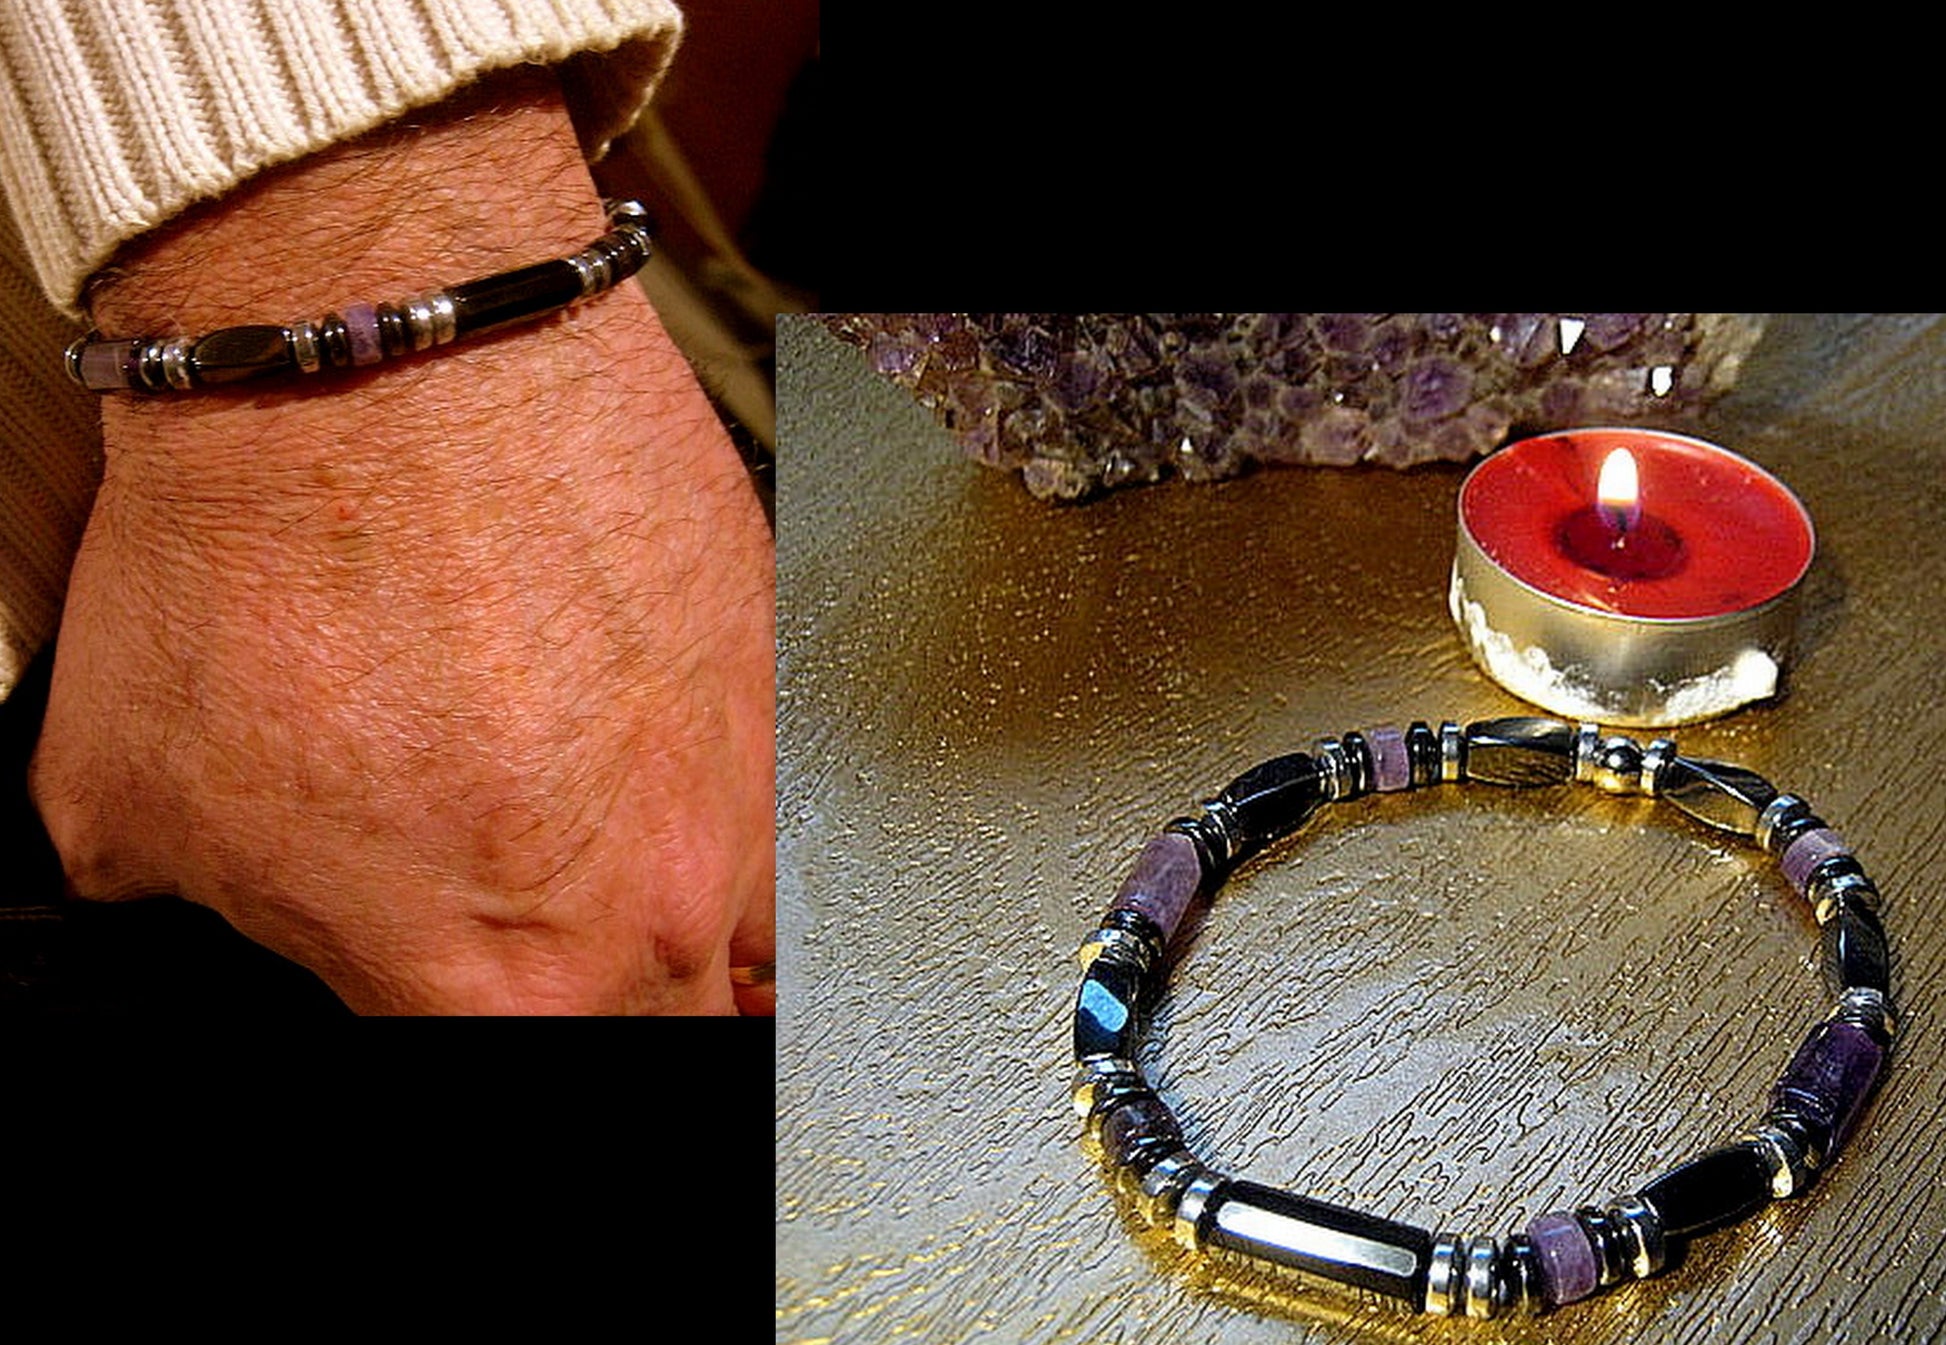 Camelys magic 4Men - Men bracelet AMETHYST Tourmaline Healing protection stone, handmade bracelet Men gift